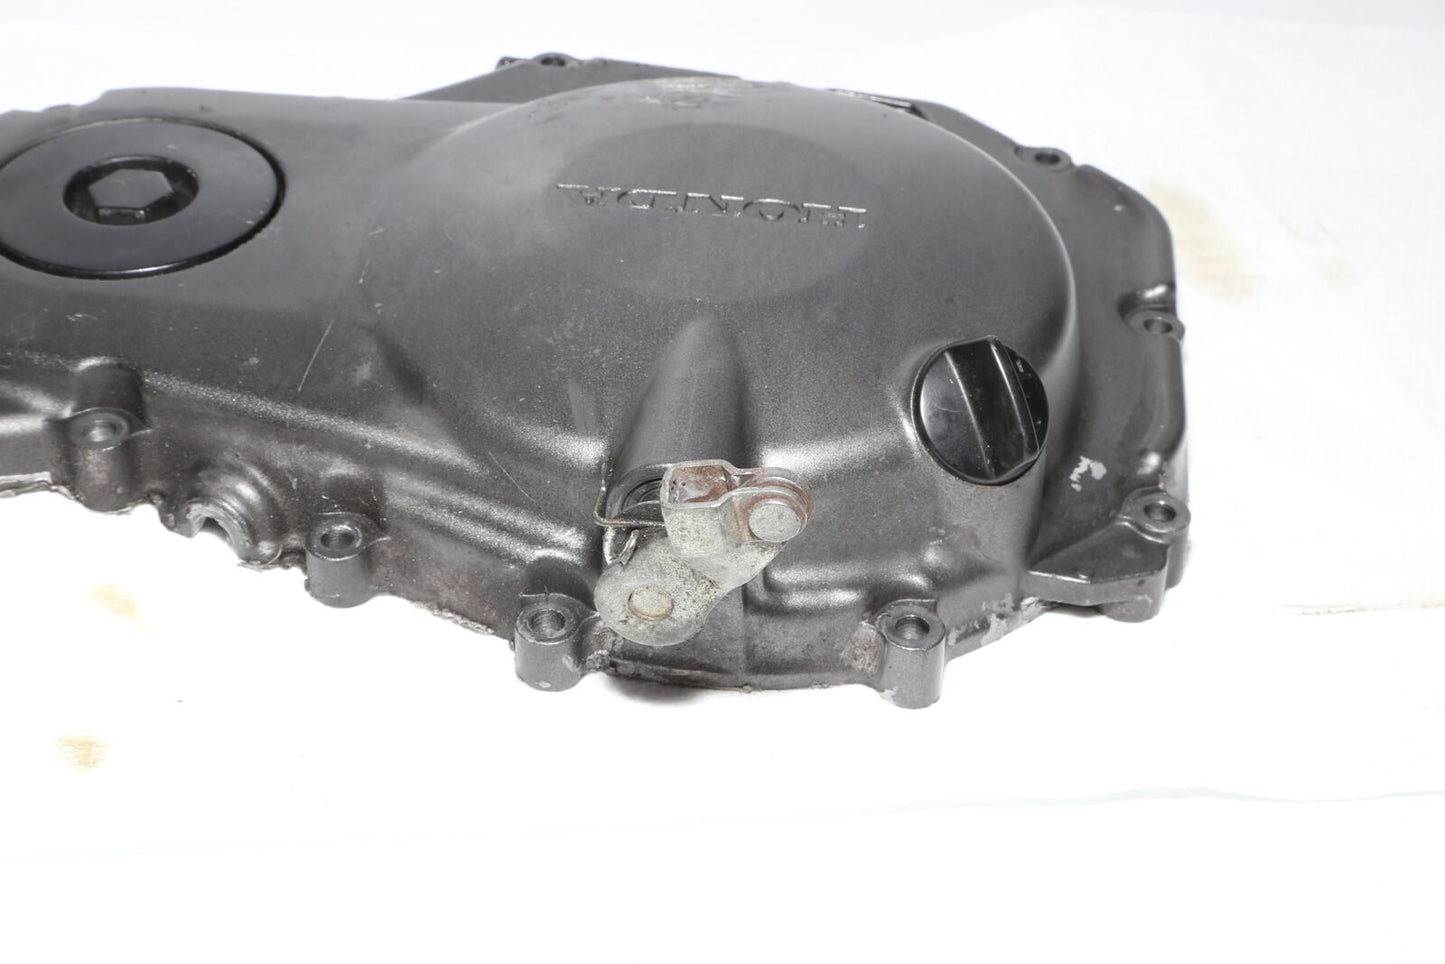 2000-2001 Honda Cbr929rr Clutch Side Engine Motor Cover w/Bolts OEM